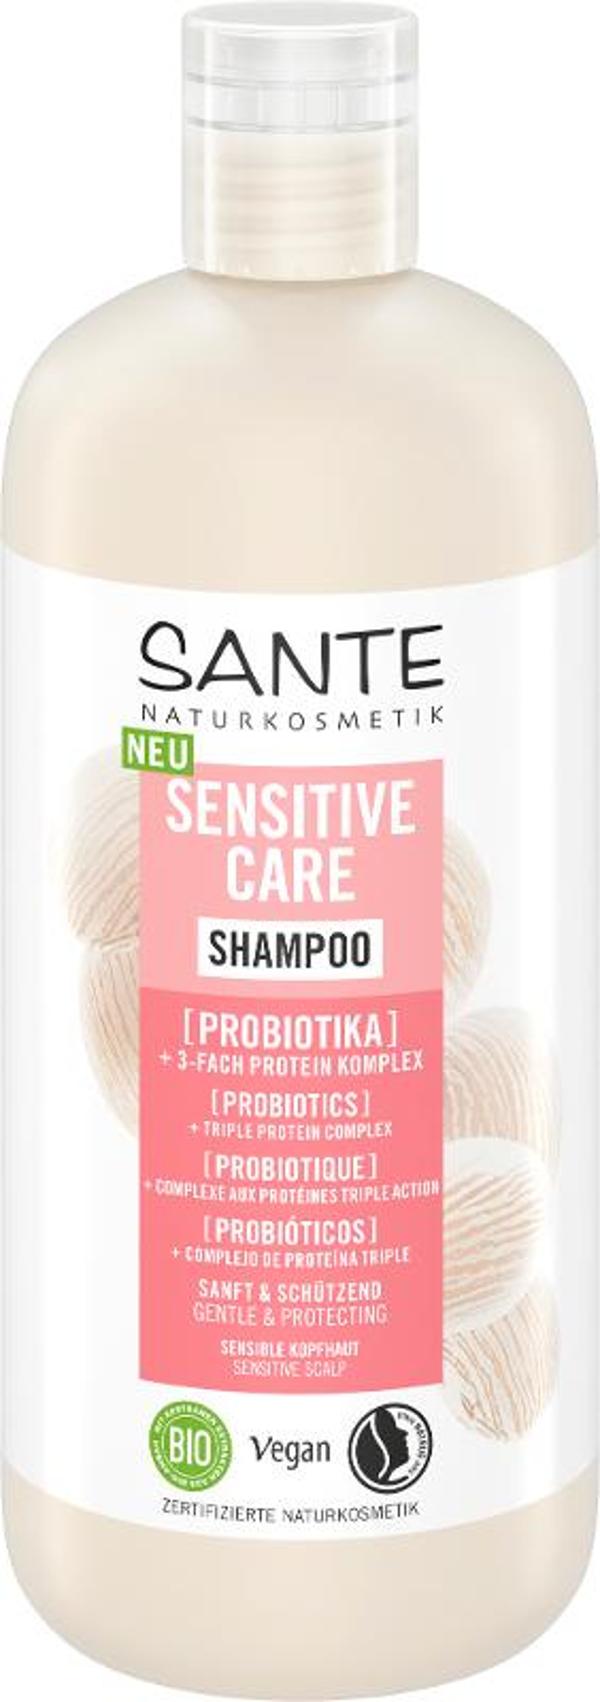 Produktfoto zu Sensitive Care Shampoo Probiotika 500ml Sante